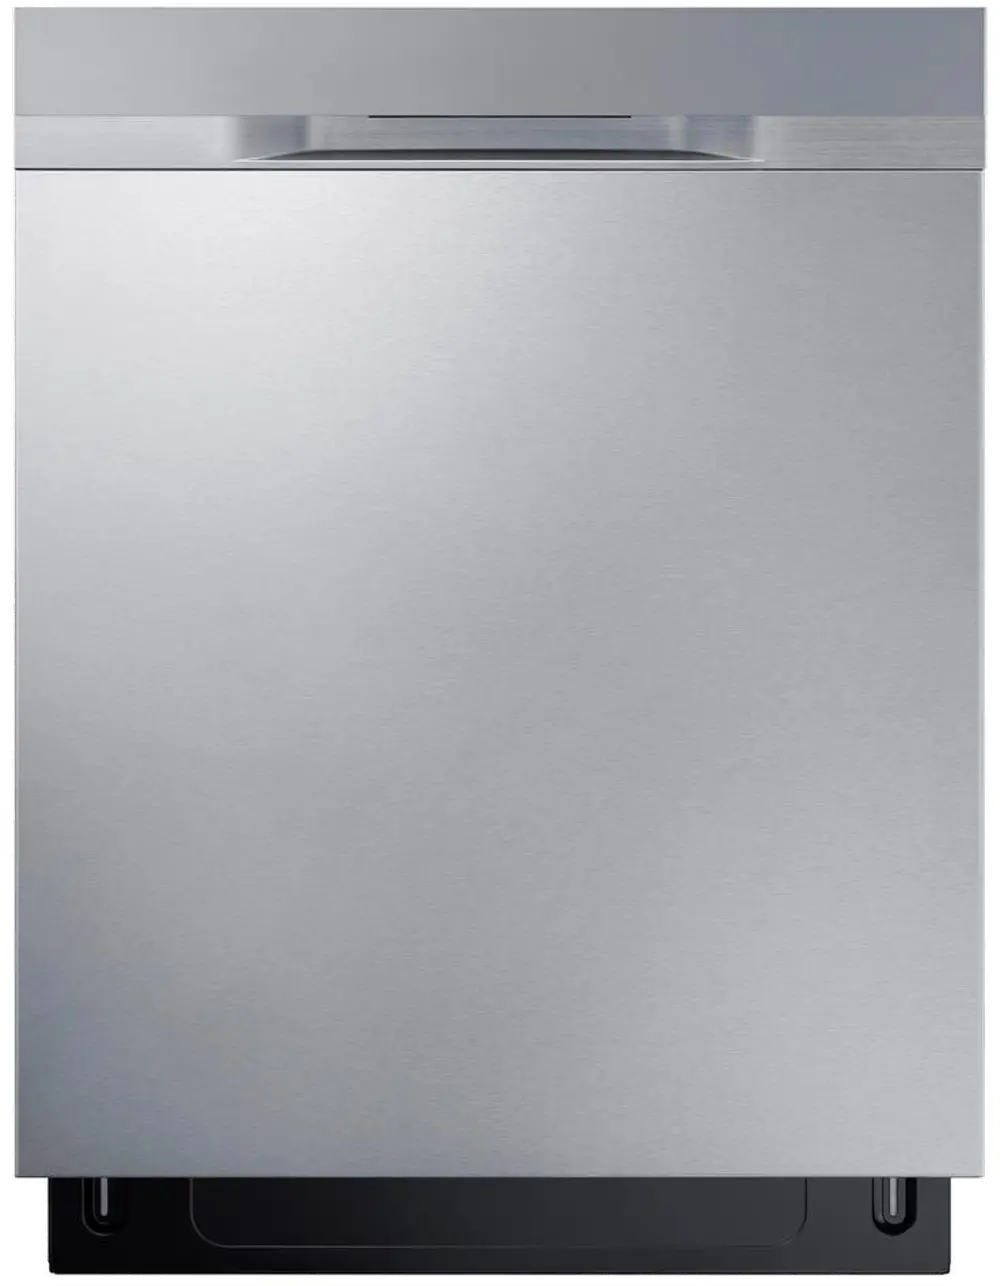 DW80K5050US Samsung Dishwasher with StormWash - Stainless Steel-1